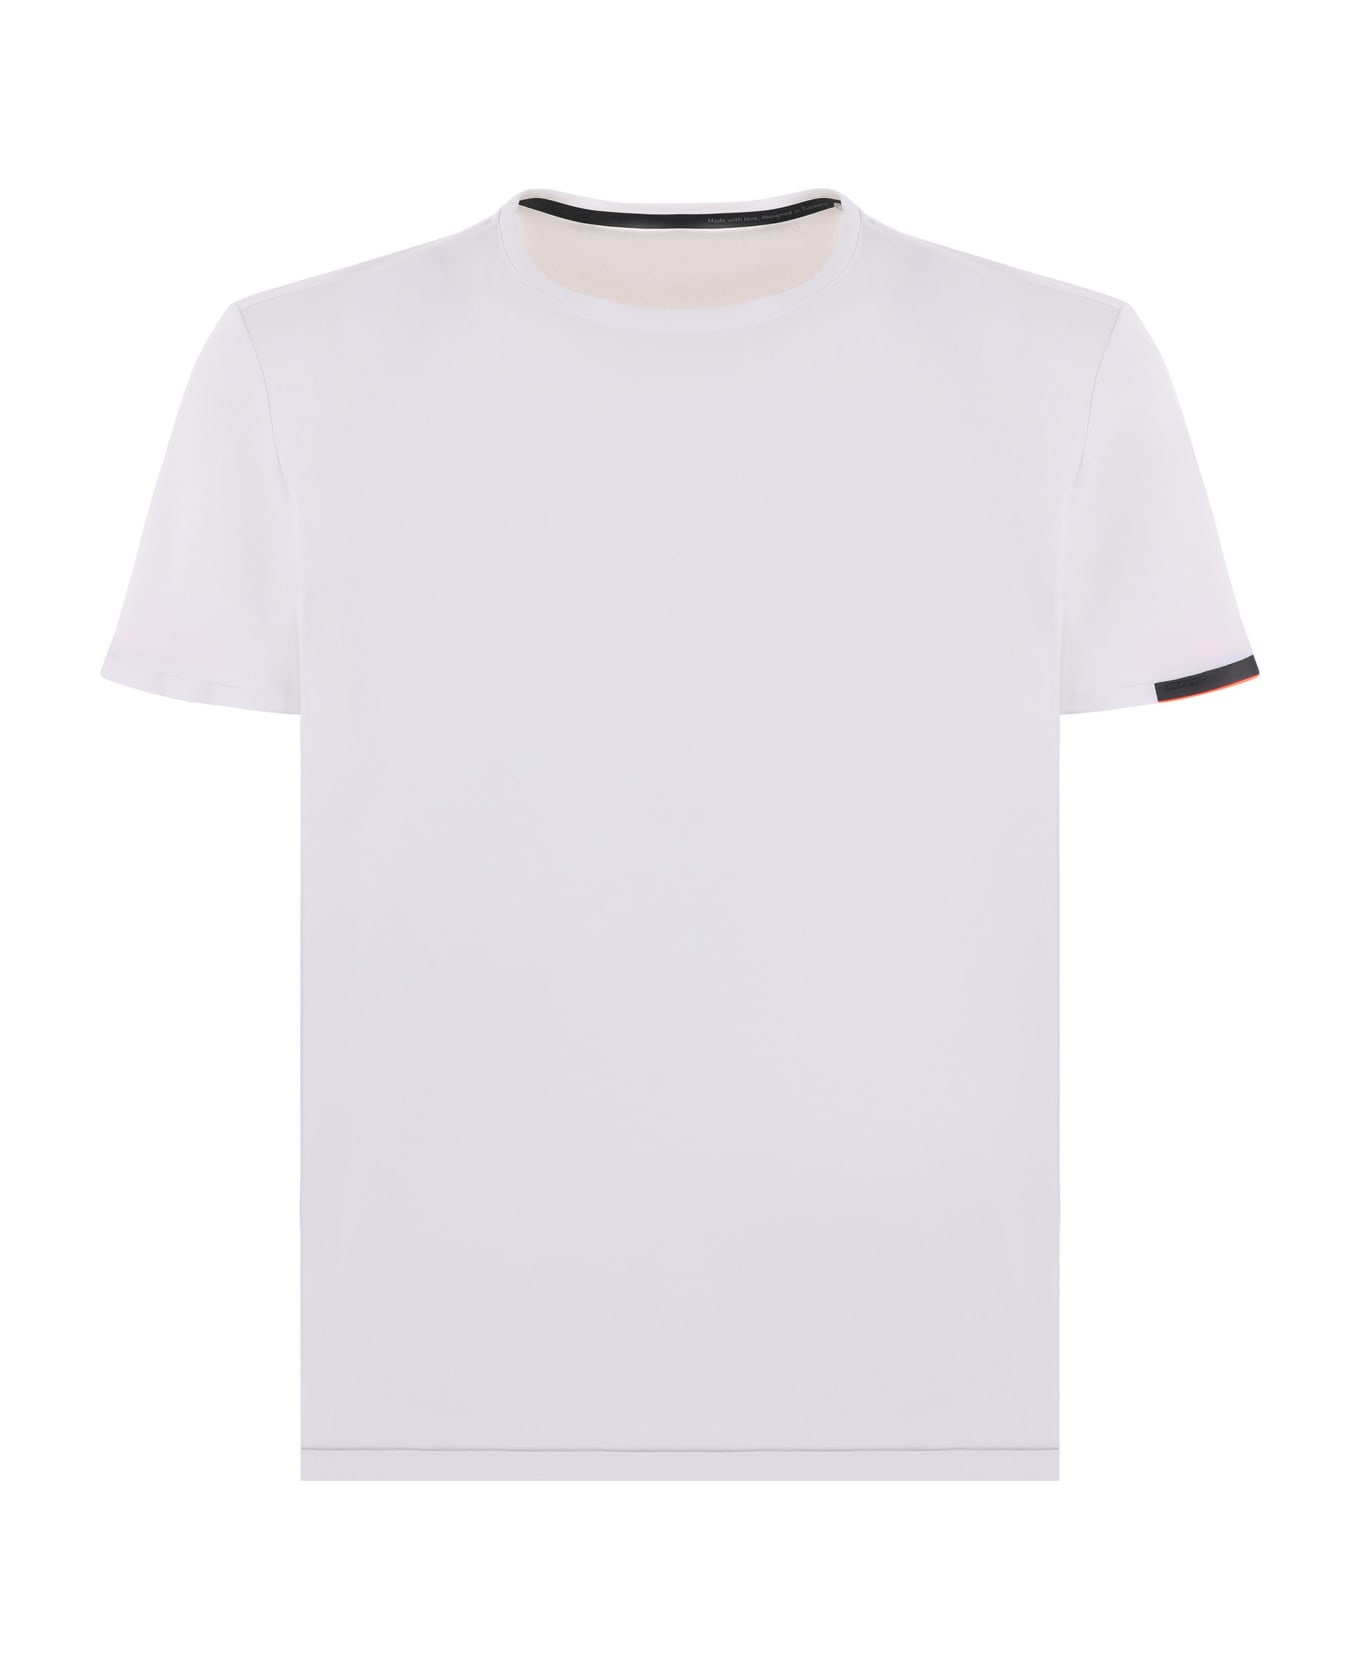 RRD - Roberto Ricci Design Rrd T-shirt - Bianco